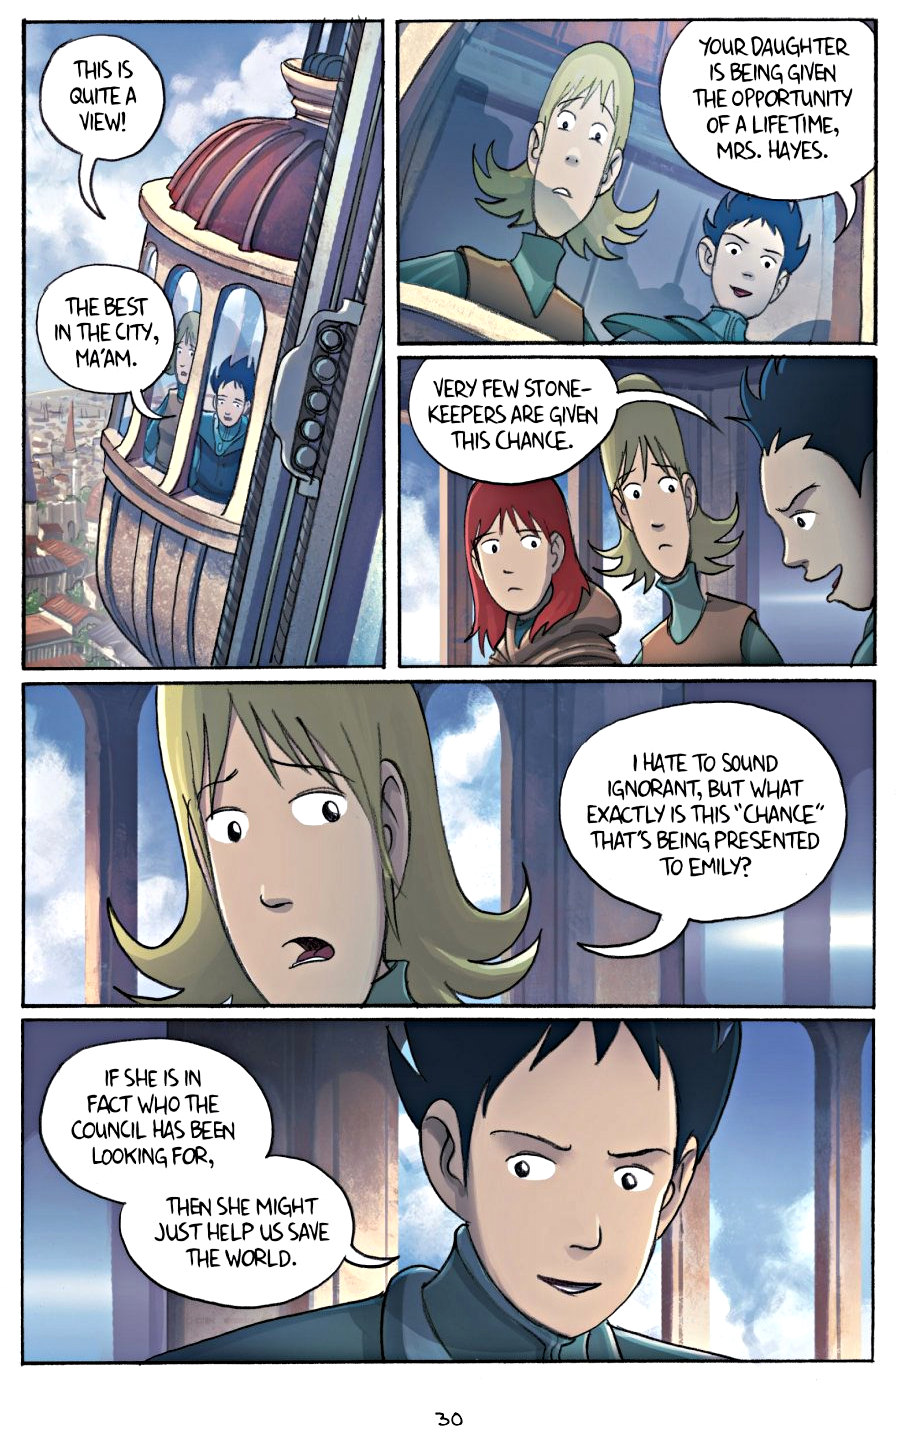 page 30 of amulet 4 last council graphic novel by kazu kibuishi